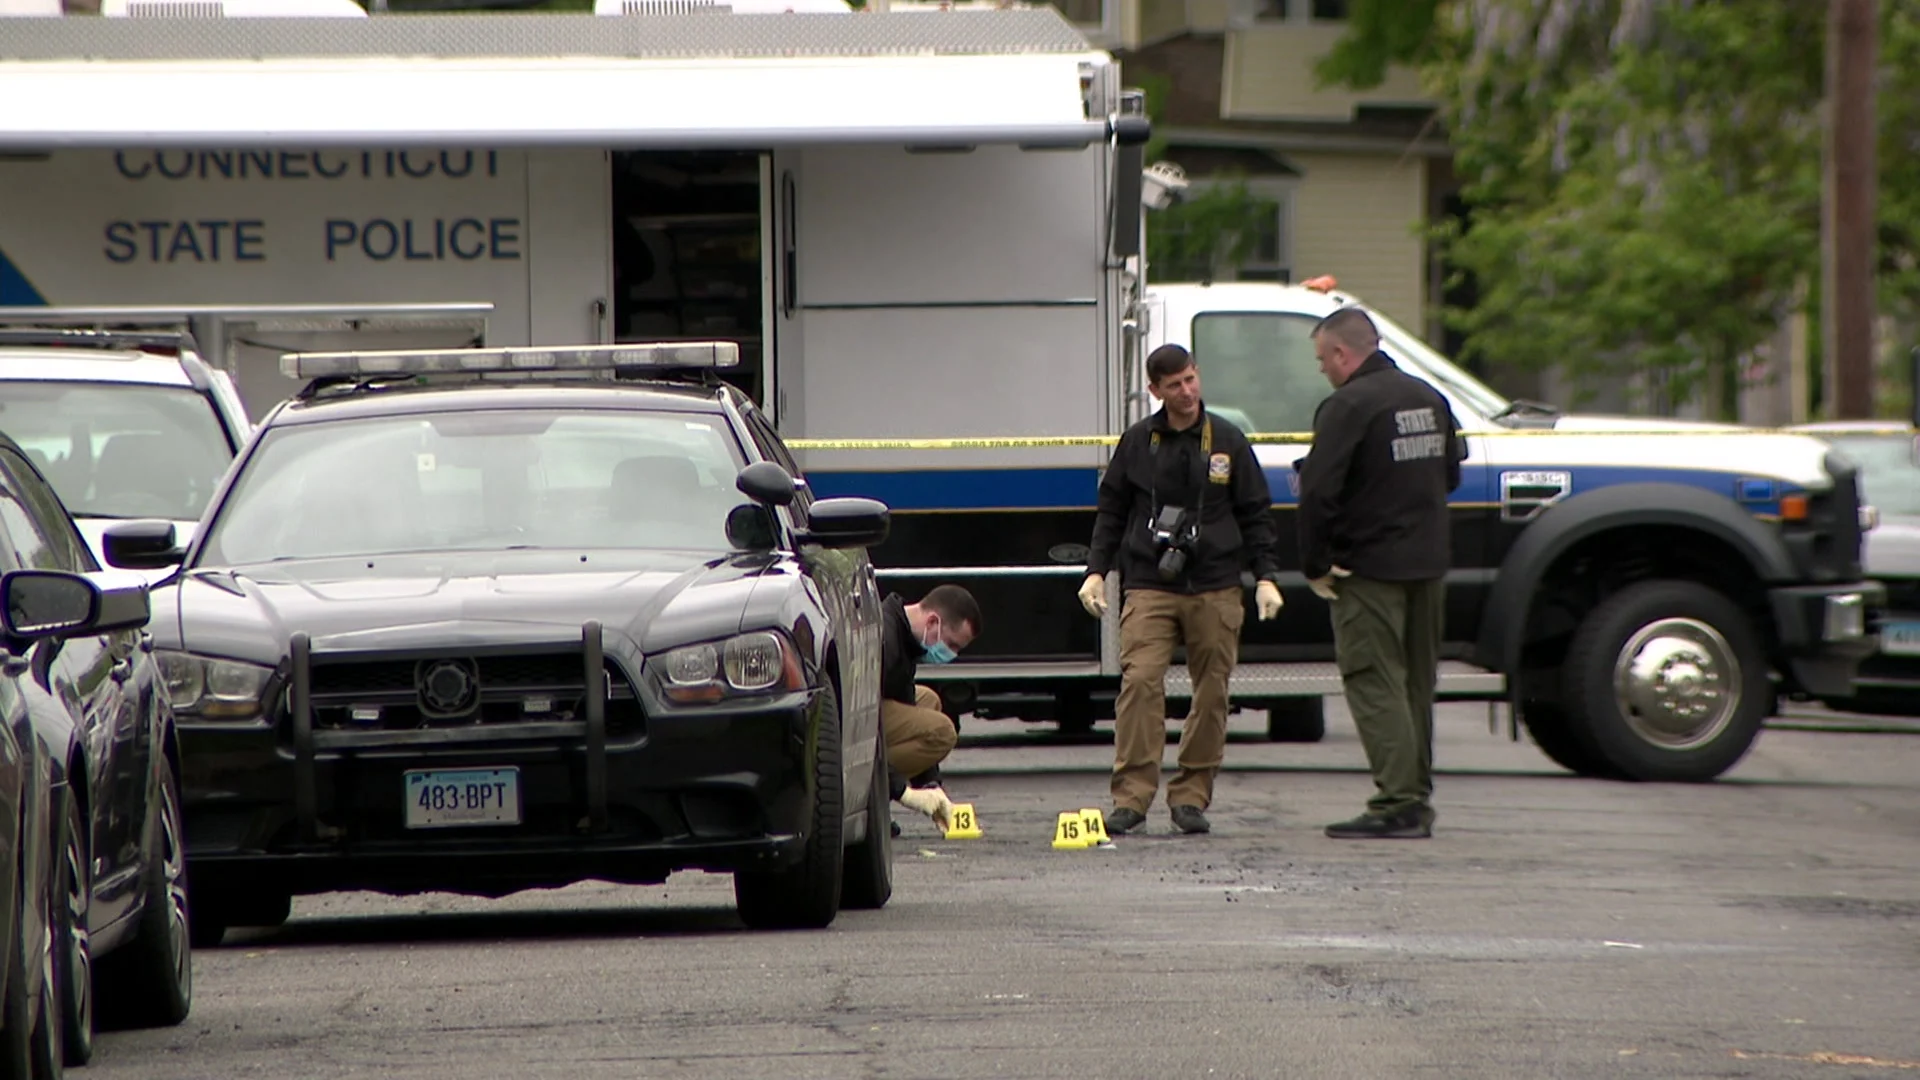 Bridgeport police shoot man brandishing knife; inspector general investigating